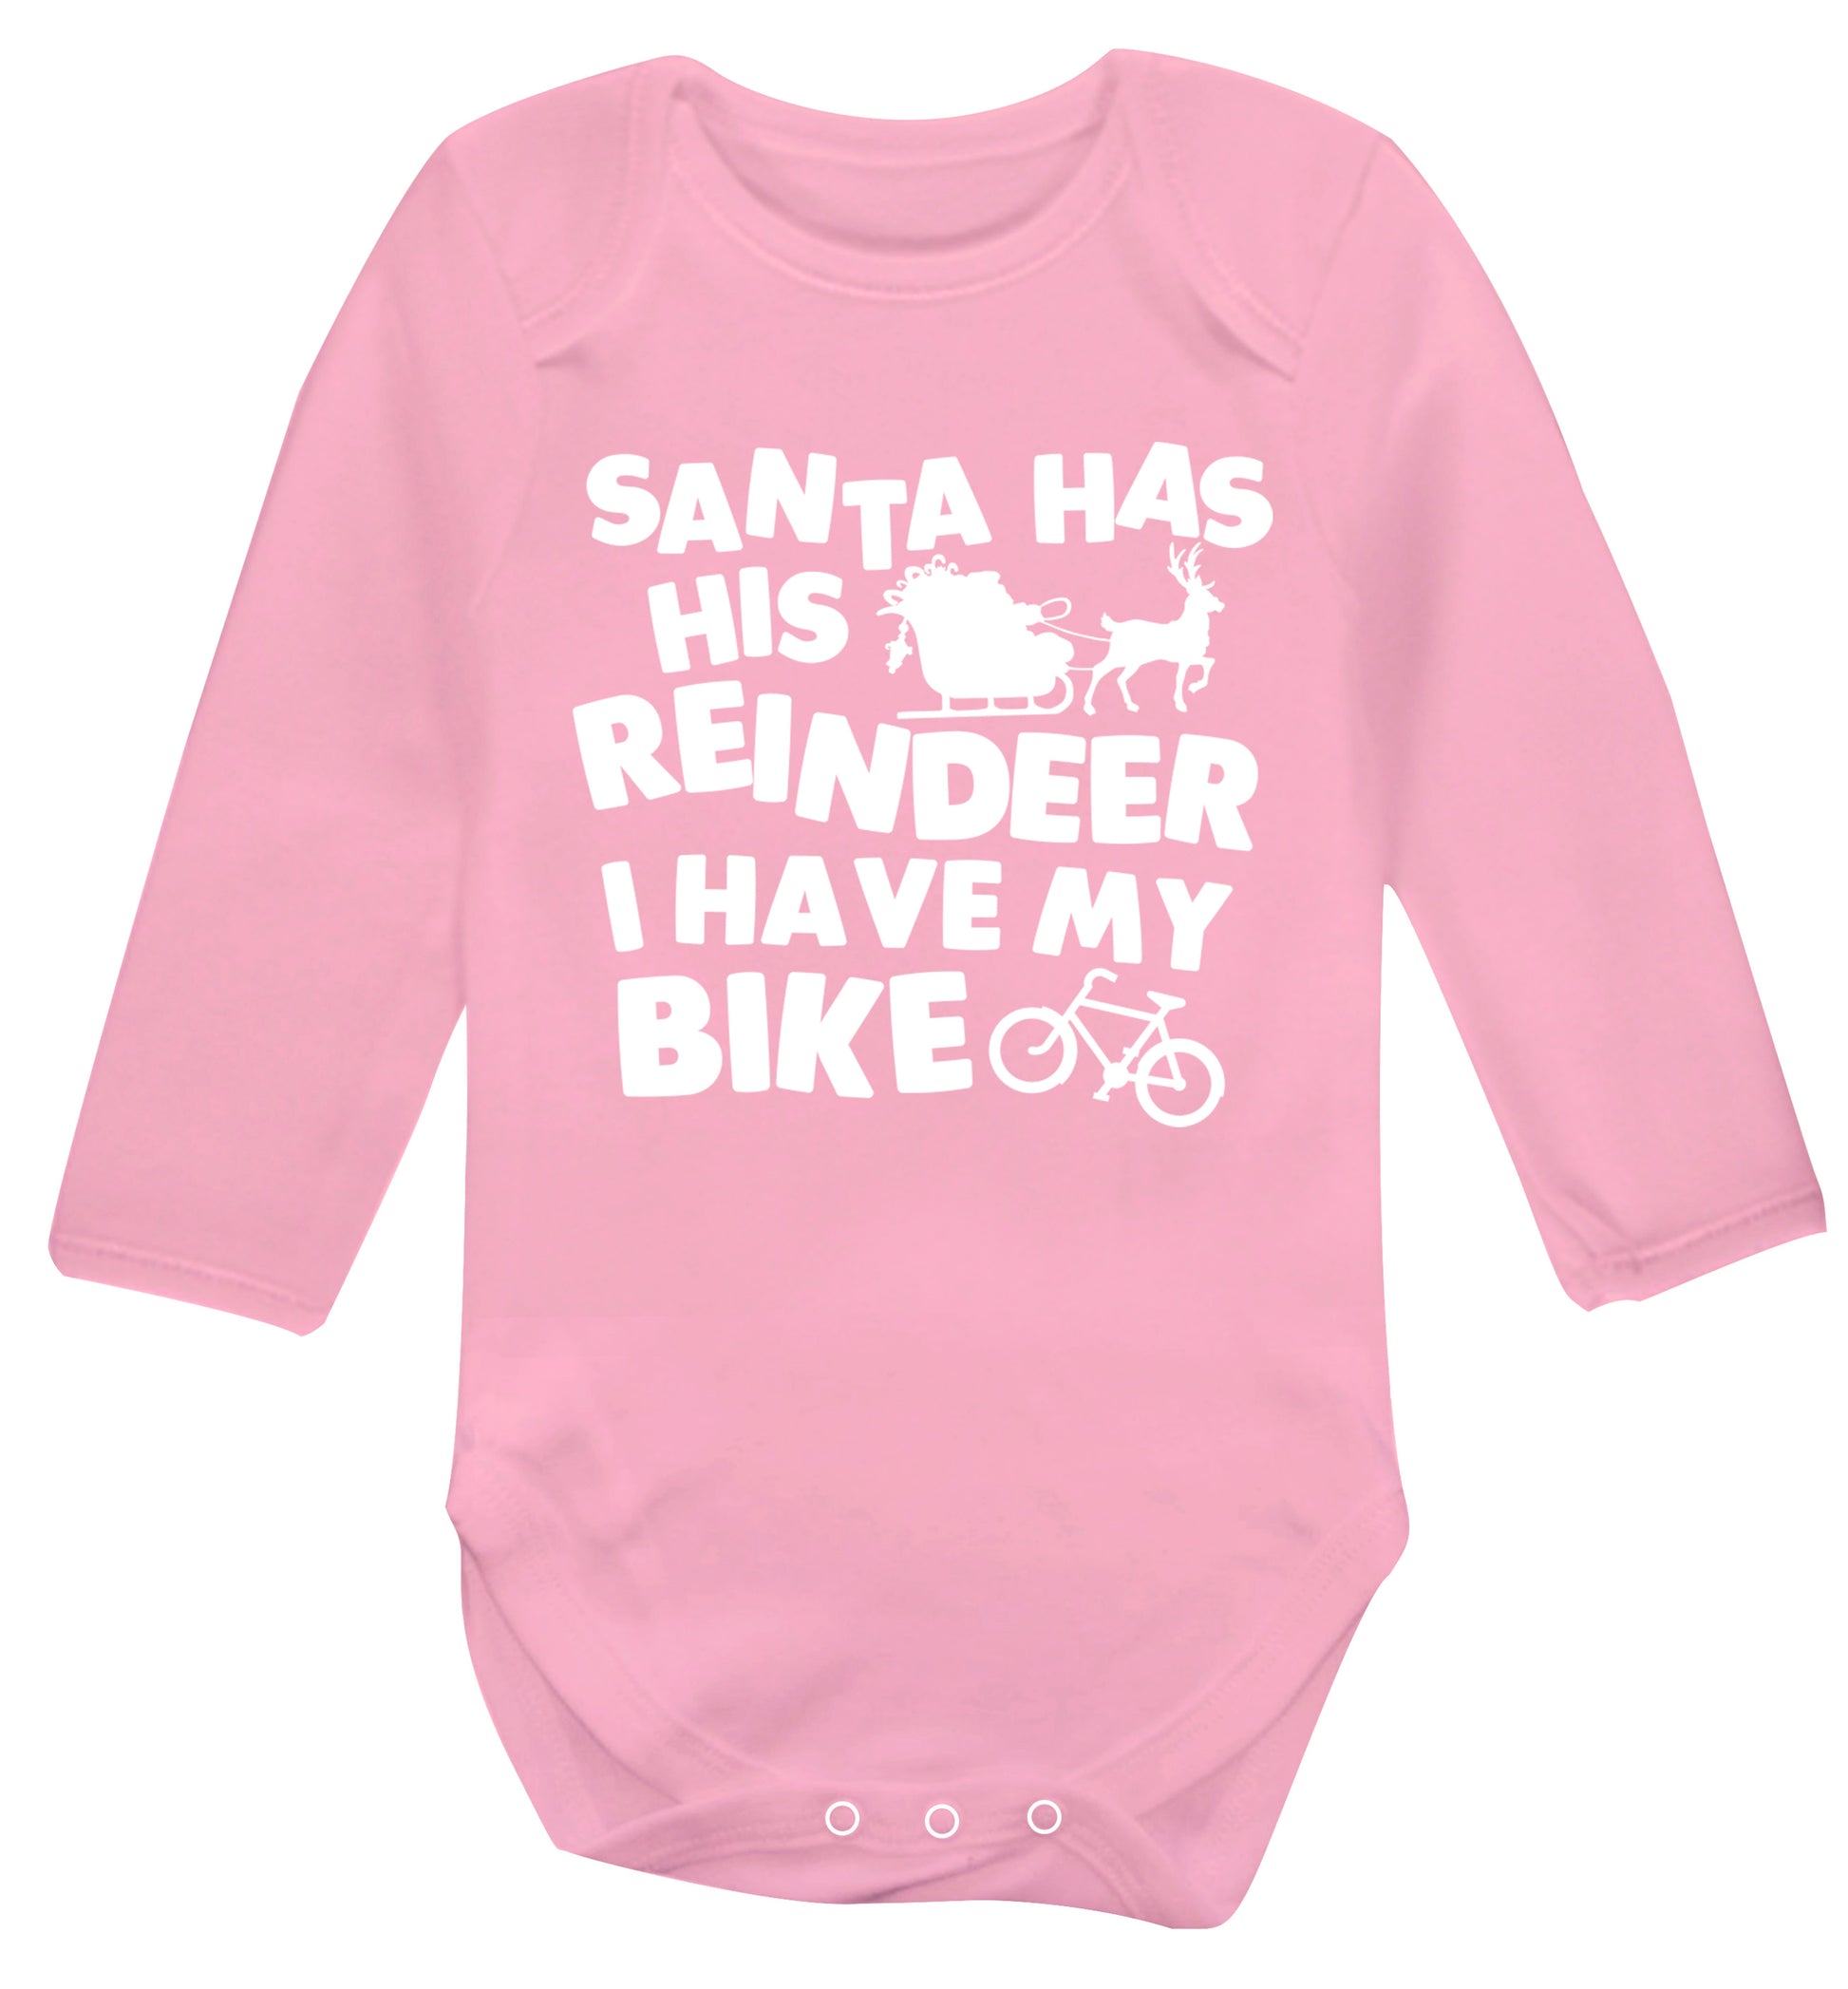 Santa has his reindeer I have my bike Baby Vest long sleeved pale pink 6-12 months